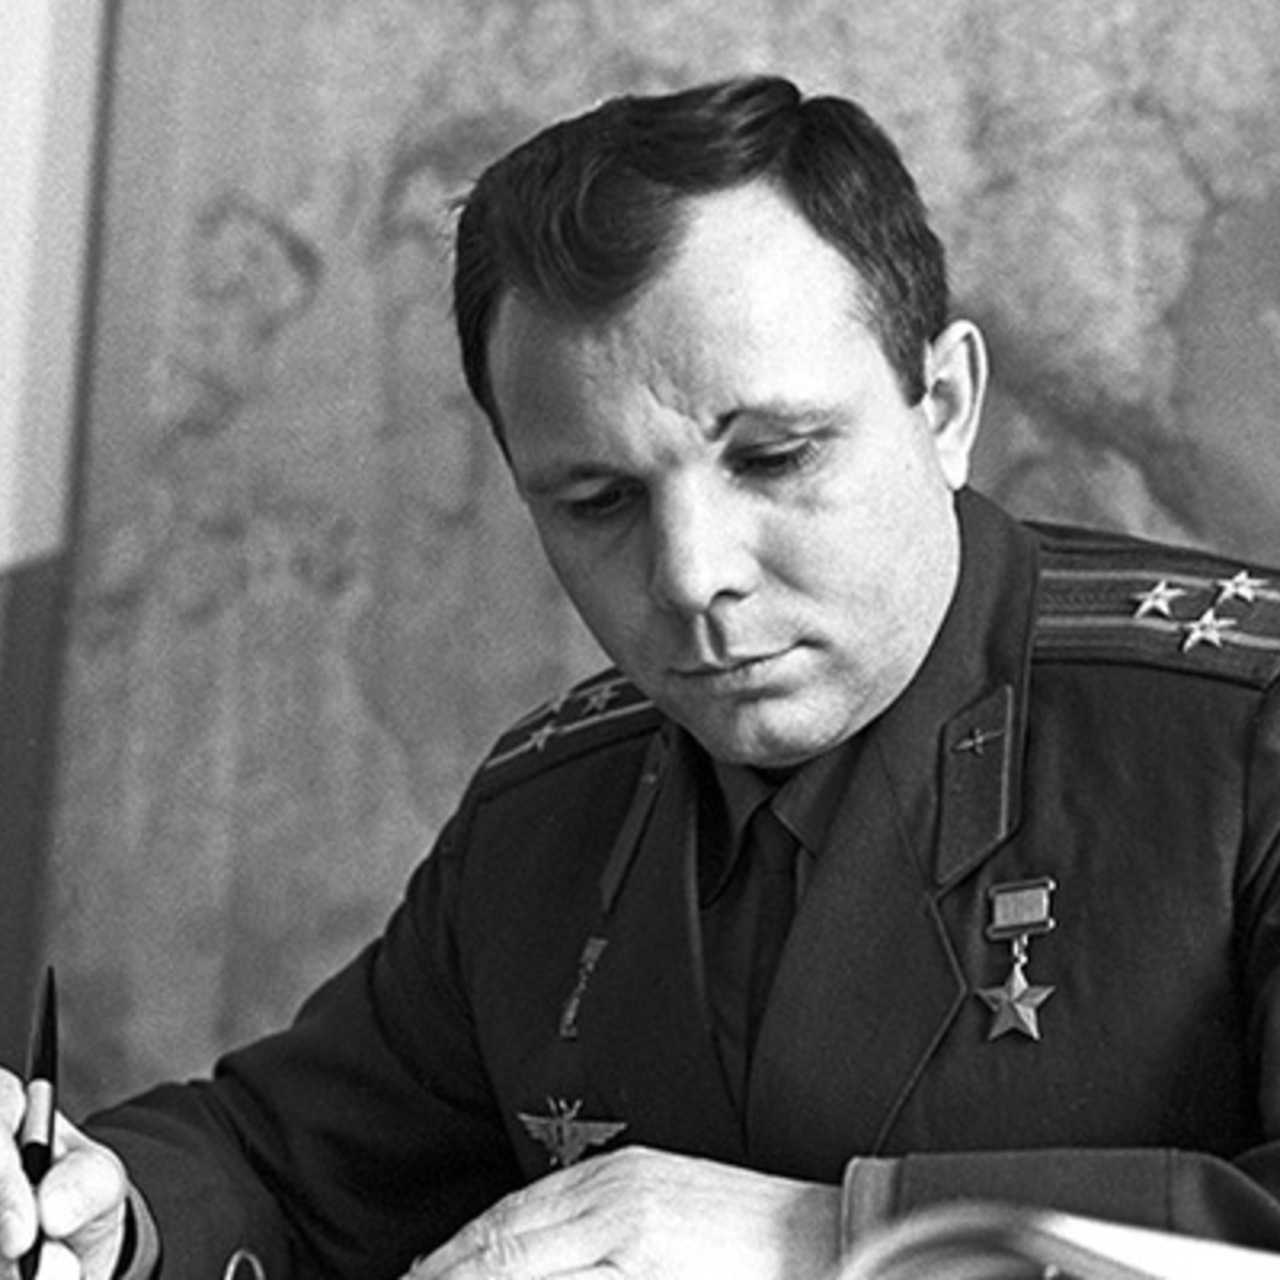 Шрам у гагарина на лбу откуда. Фото Юрия Гагарина. Юрин Гагарин.